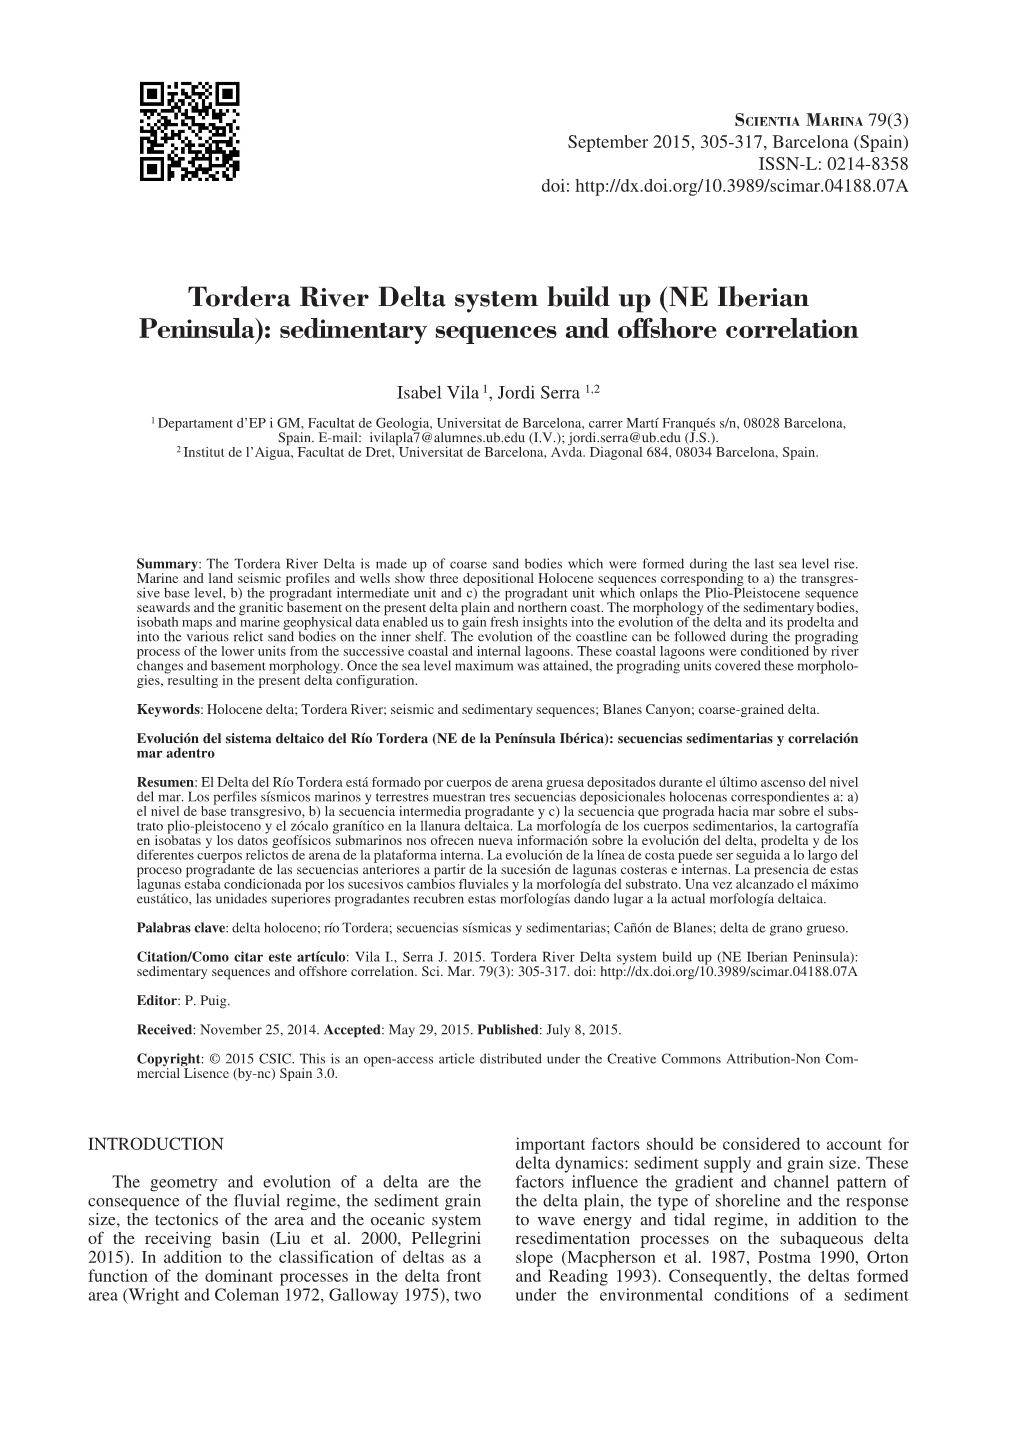 Tordera River Delta System Build up (NE Iberian Peninsula): Sedimentary Sequences and Offshore Correlation